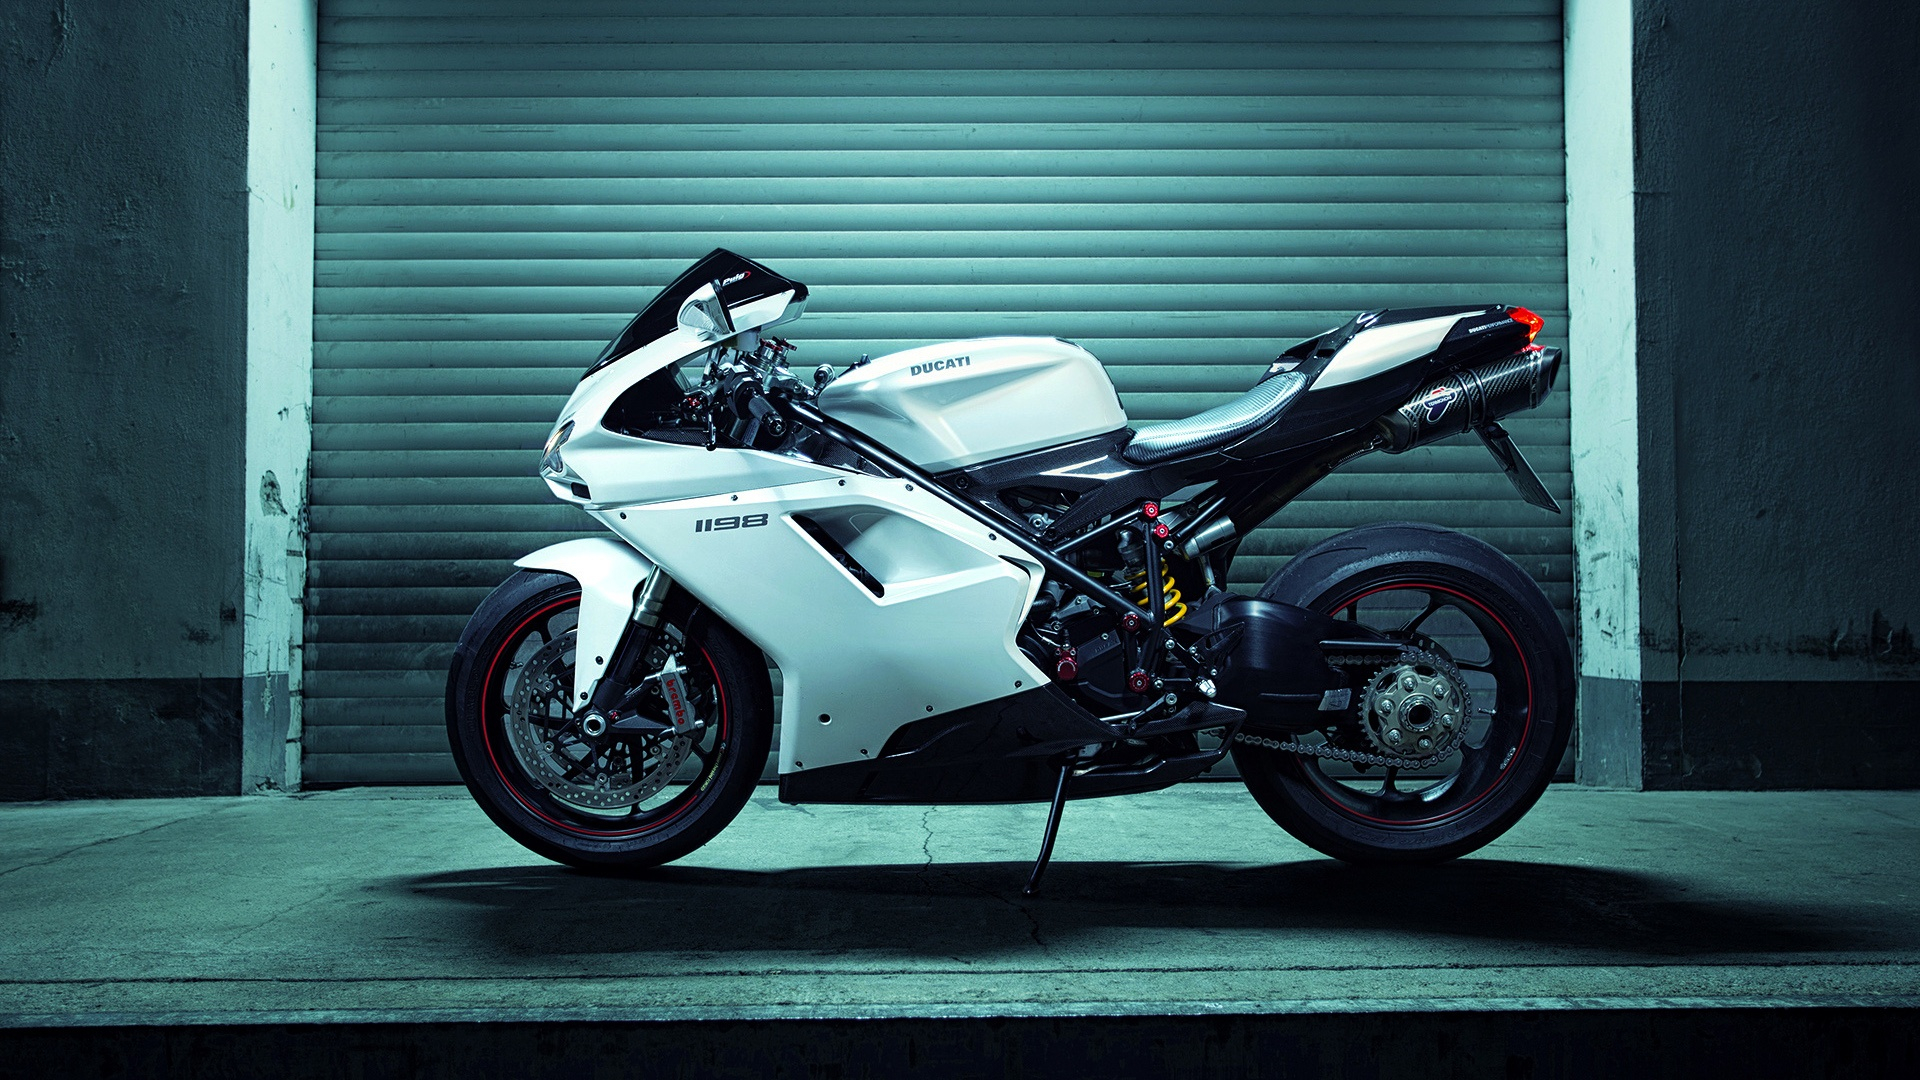 1920x1080 Wallpaper : Ducati, superbike, motorcycle, Garage, lights, vehicle Driges 1780611 HD Wallpapers